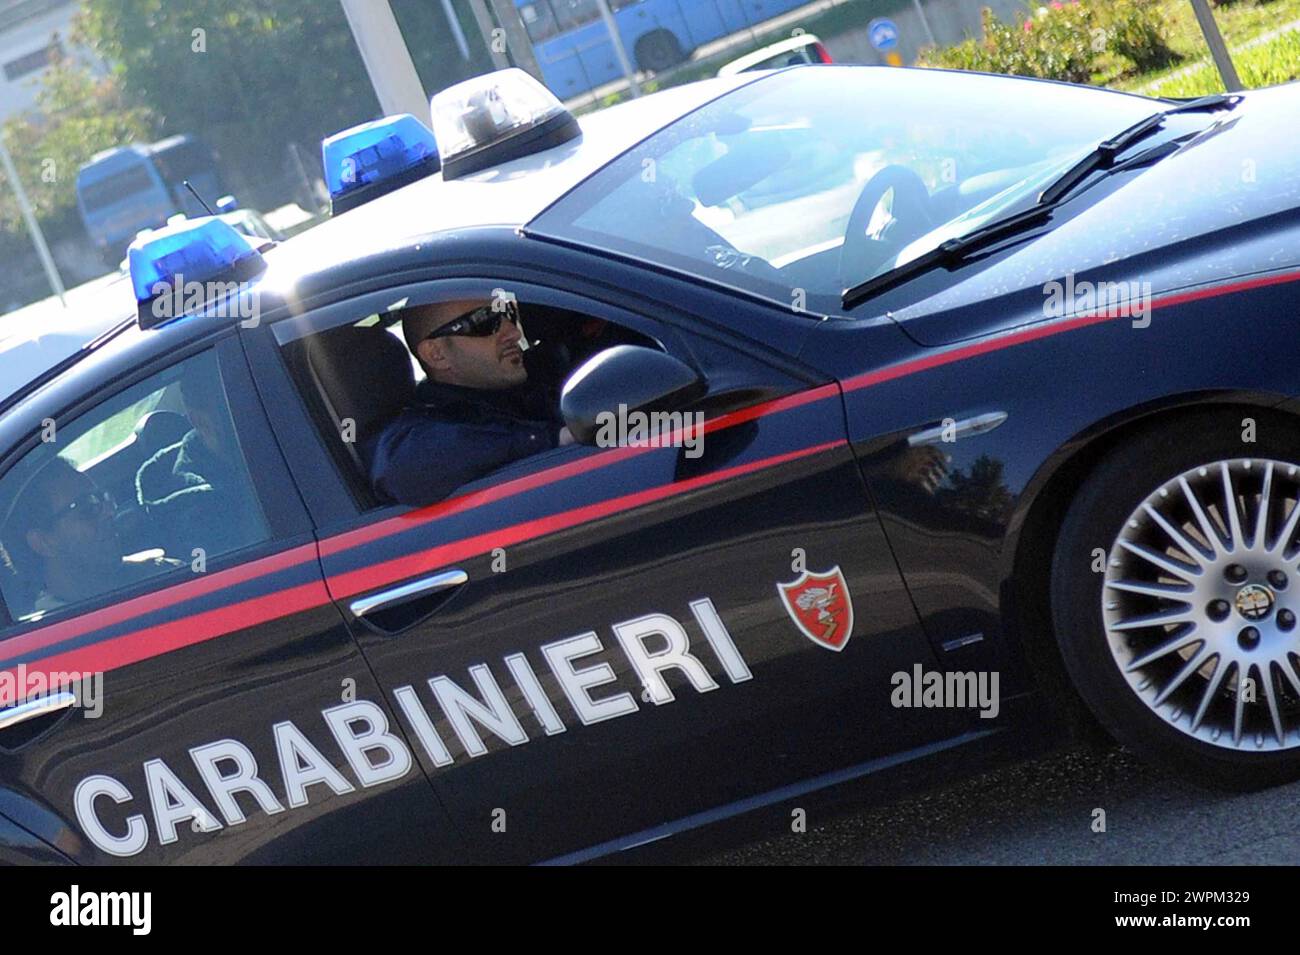 Carabinieri, arma dei carabinieri posto di blocco Foto de stock